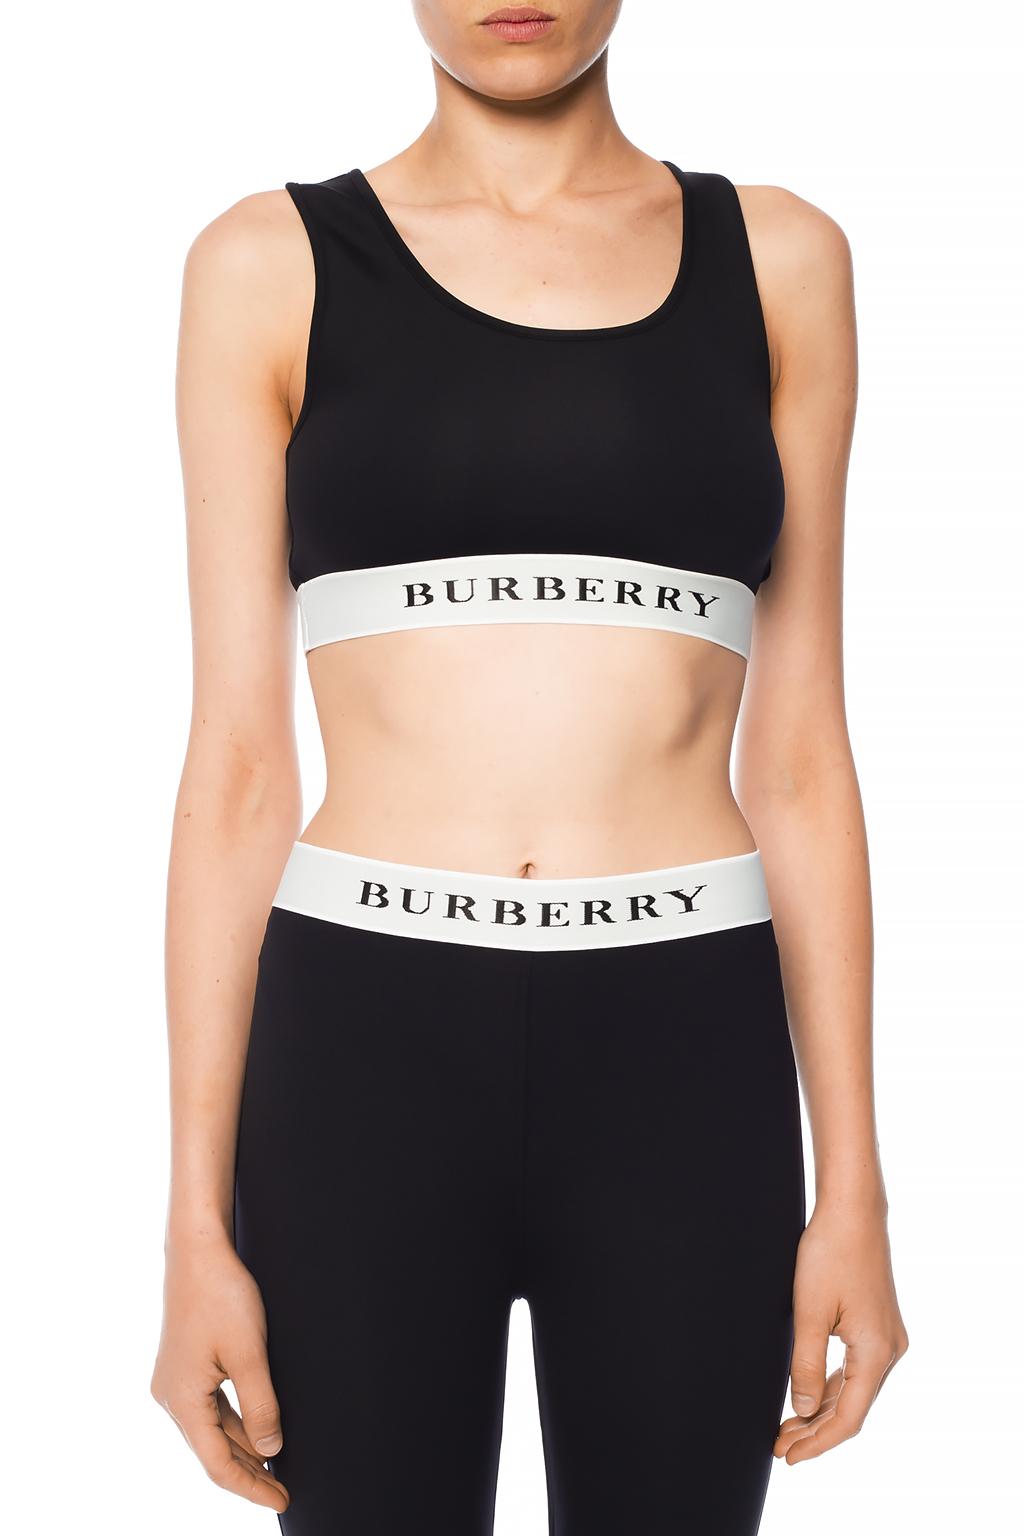 burberry sport bra